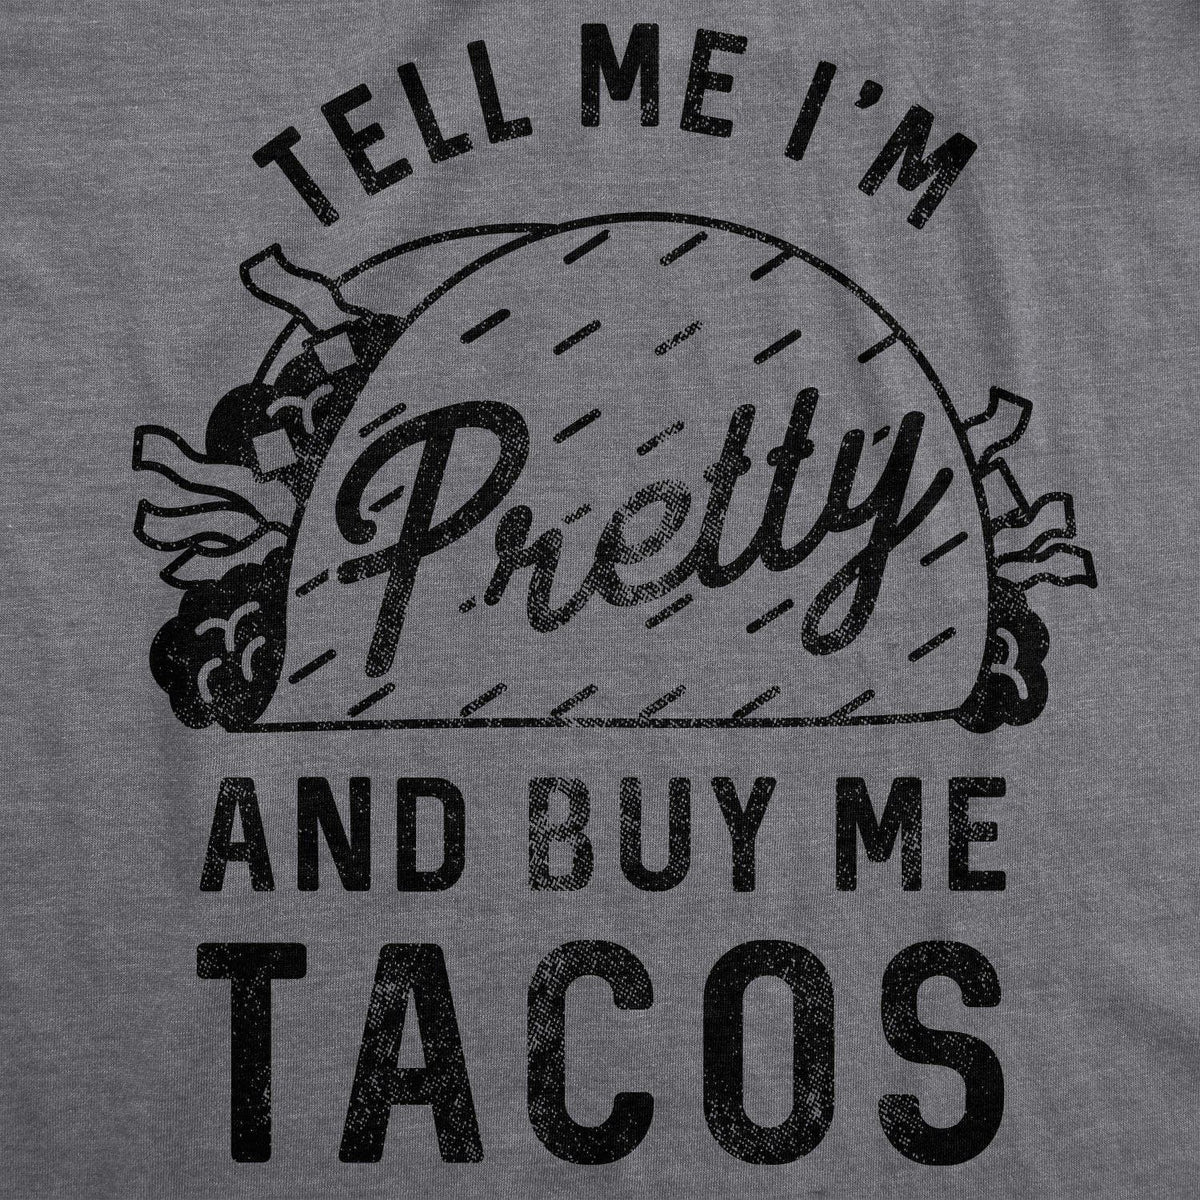 Tell Me I&#39;m Pretty And Buy Me Tacos Women&#39;s Tshirt  -  Crazy Dog T-Shirts